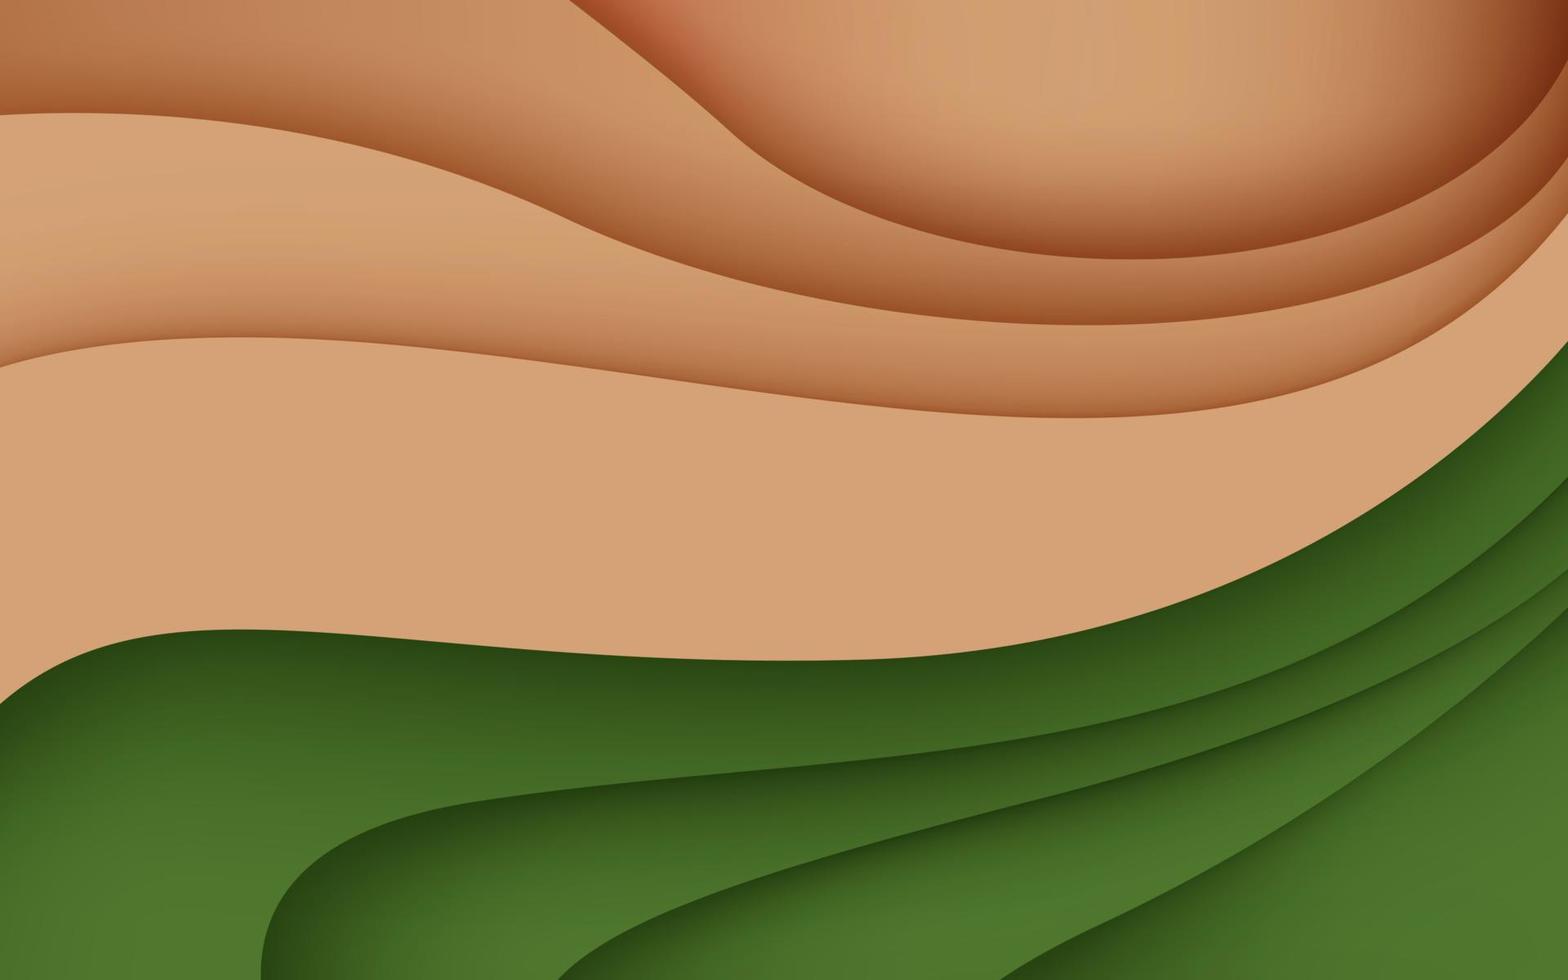 capas múltiples de textura verde marrón capas de corte de papel 3d en banner de vector degradado. diseño de fondo de arte de corte de papel abstracto para plantilla de sitio web. concepto de mapa topográfico o corte de papel de origami suave